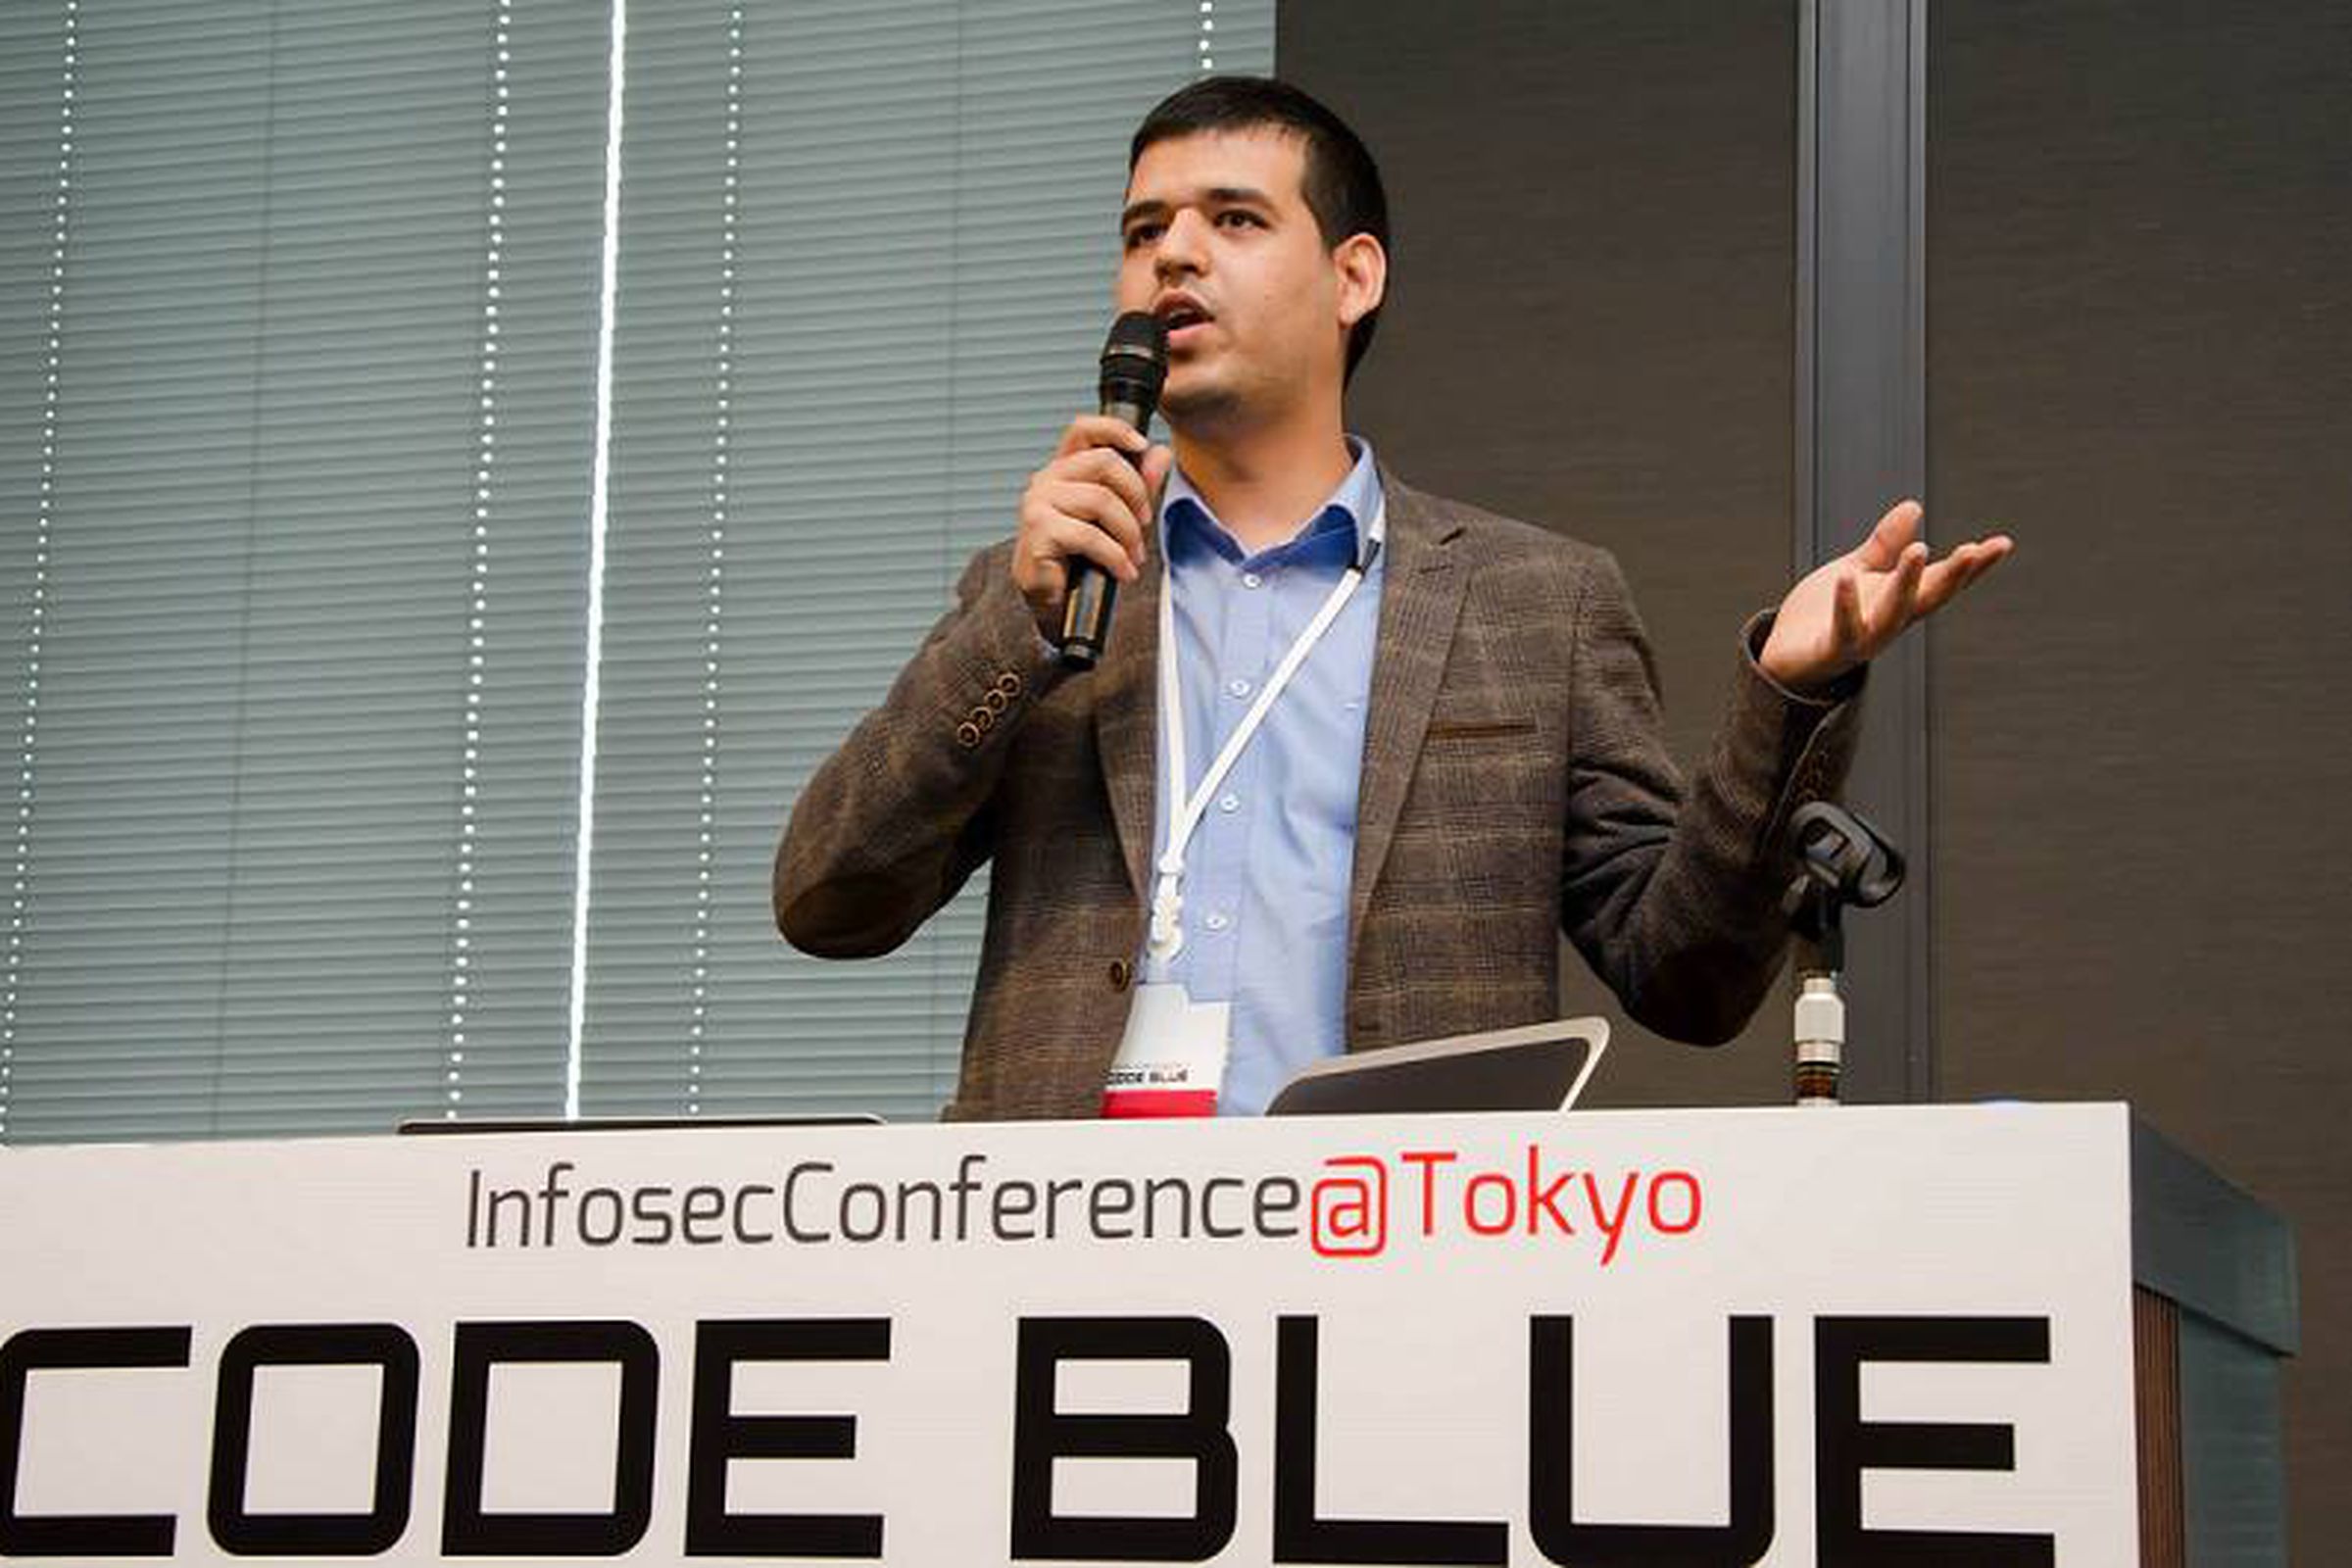 Celil Unuver at a conference in Tokyo